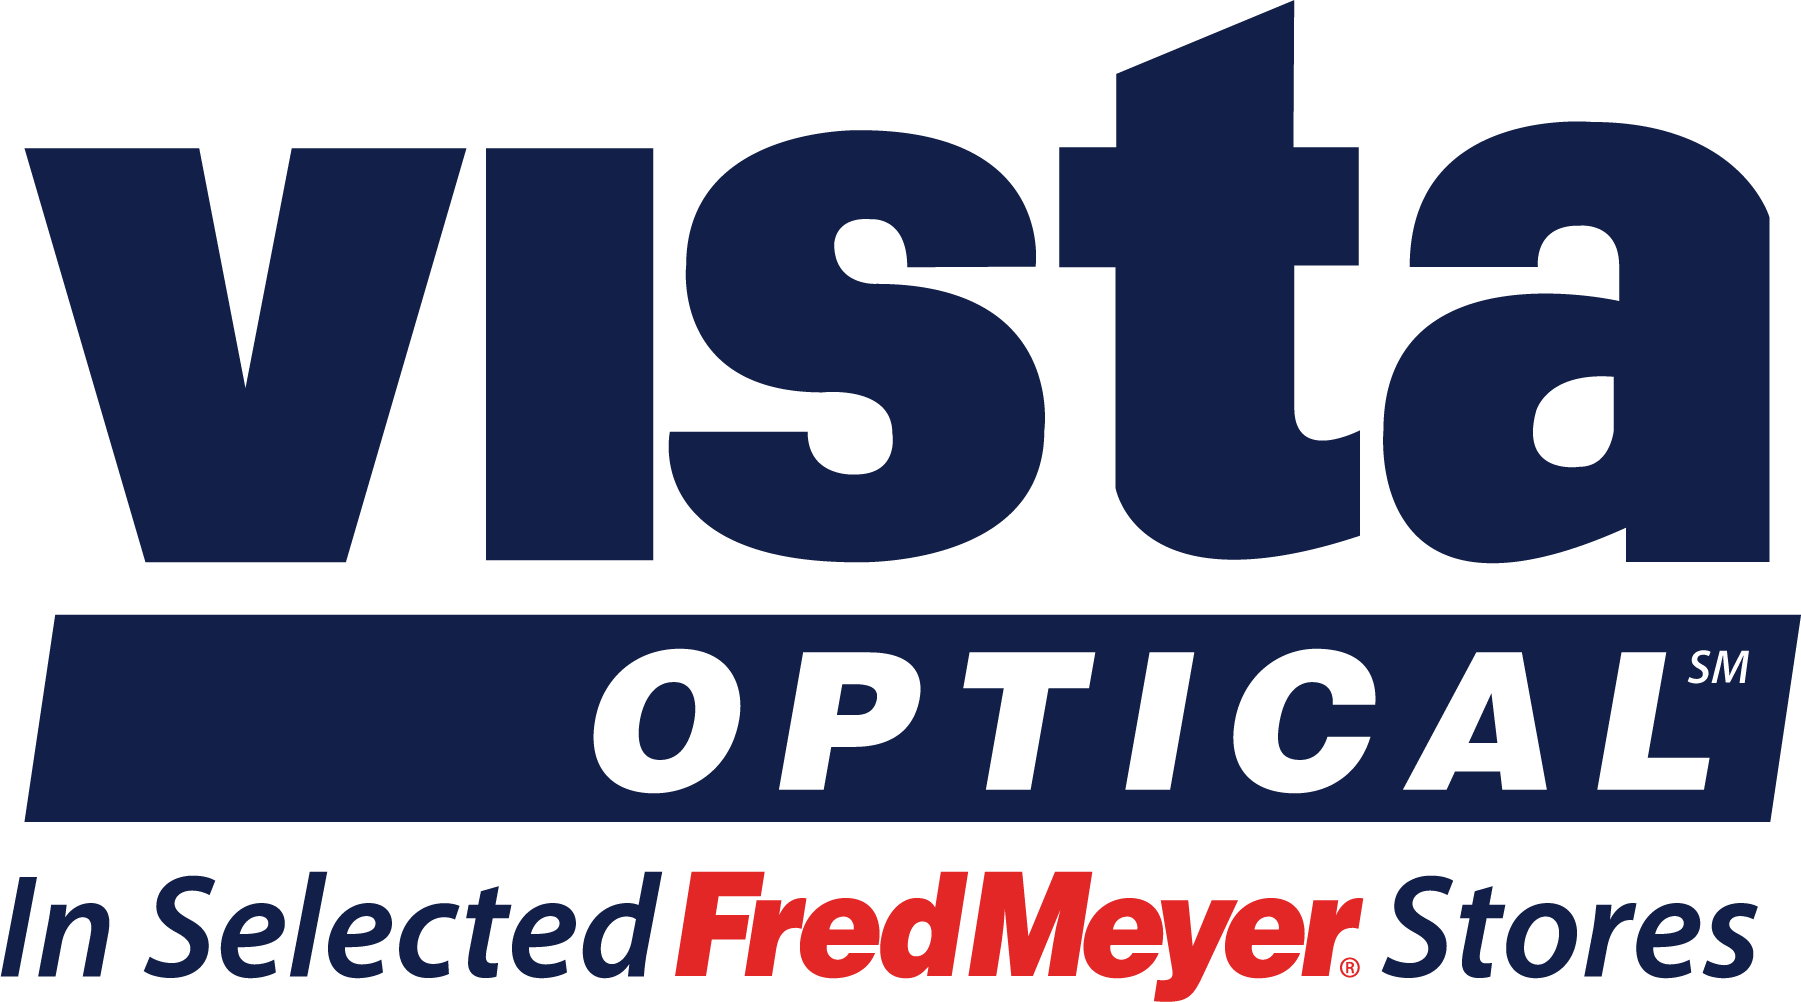 Fred Meyers Vista Optical